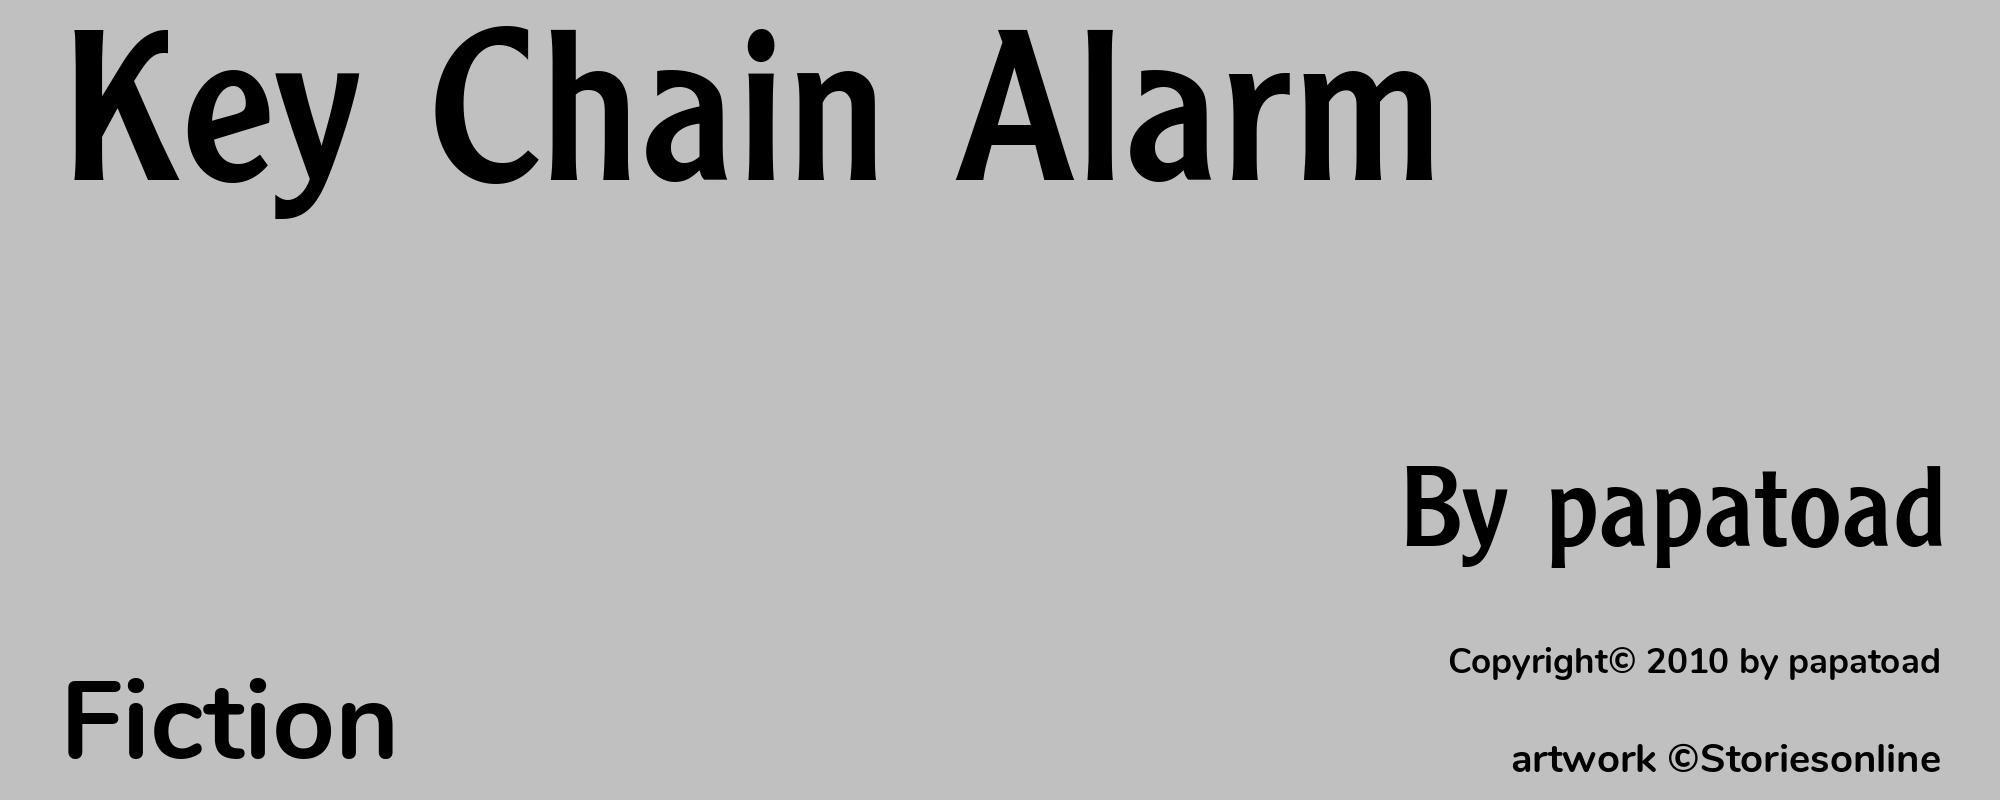 Key Chain Alarm - Cover